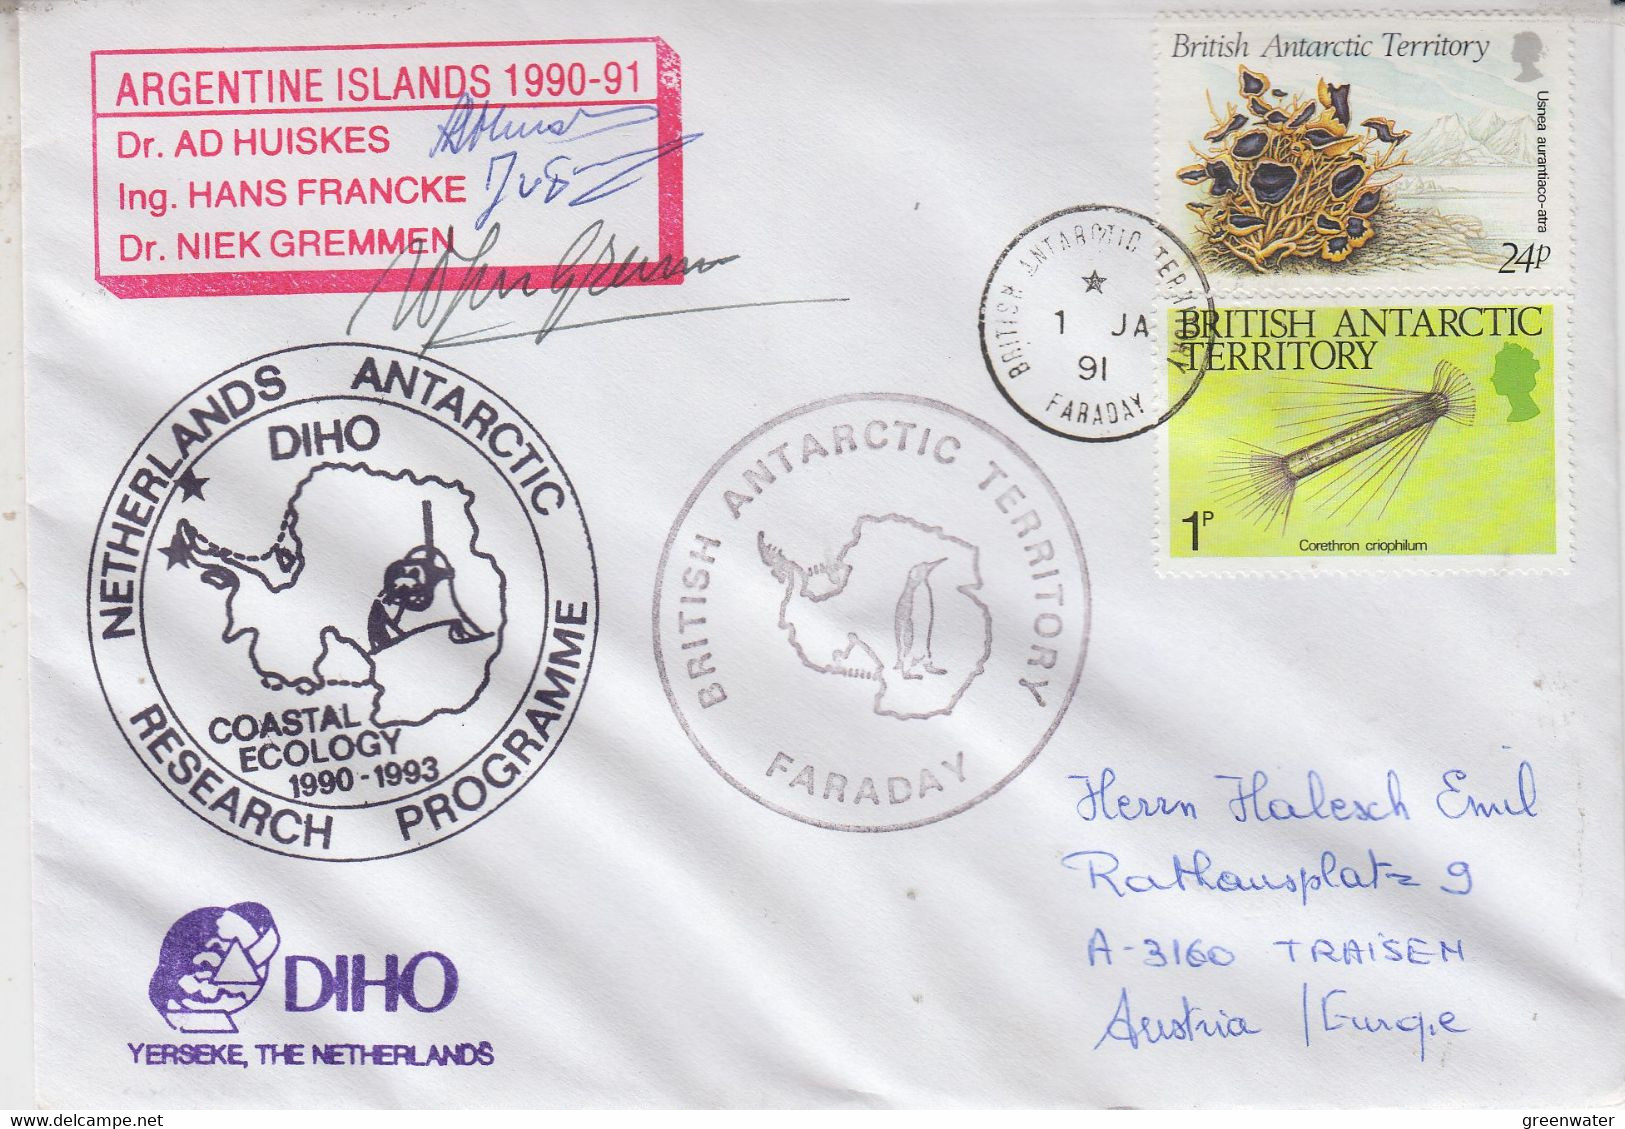 British Antarctic Terr. (BAT)cover Netherlands Antarctic Progr. Diho Yerseke 3 Signatures Ca Faraday1 JA 1991  (NL203) - Briefe U. Dokumente